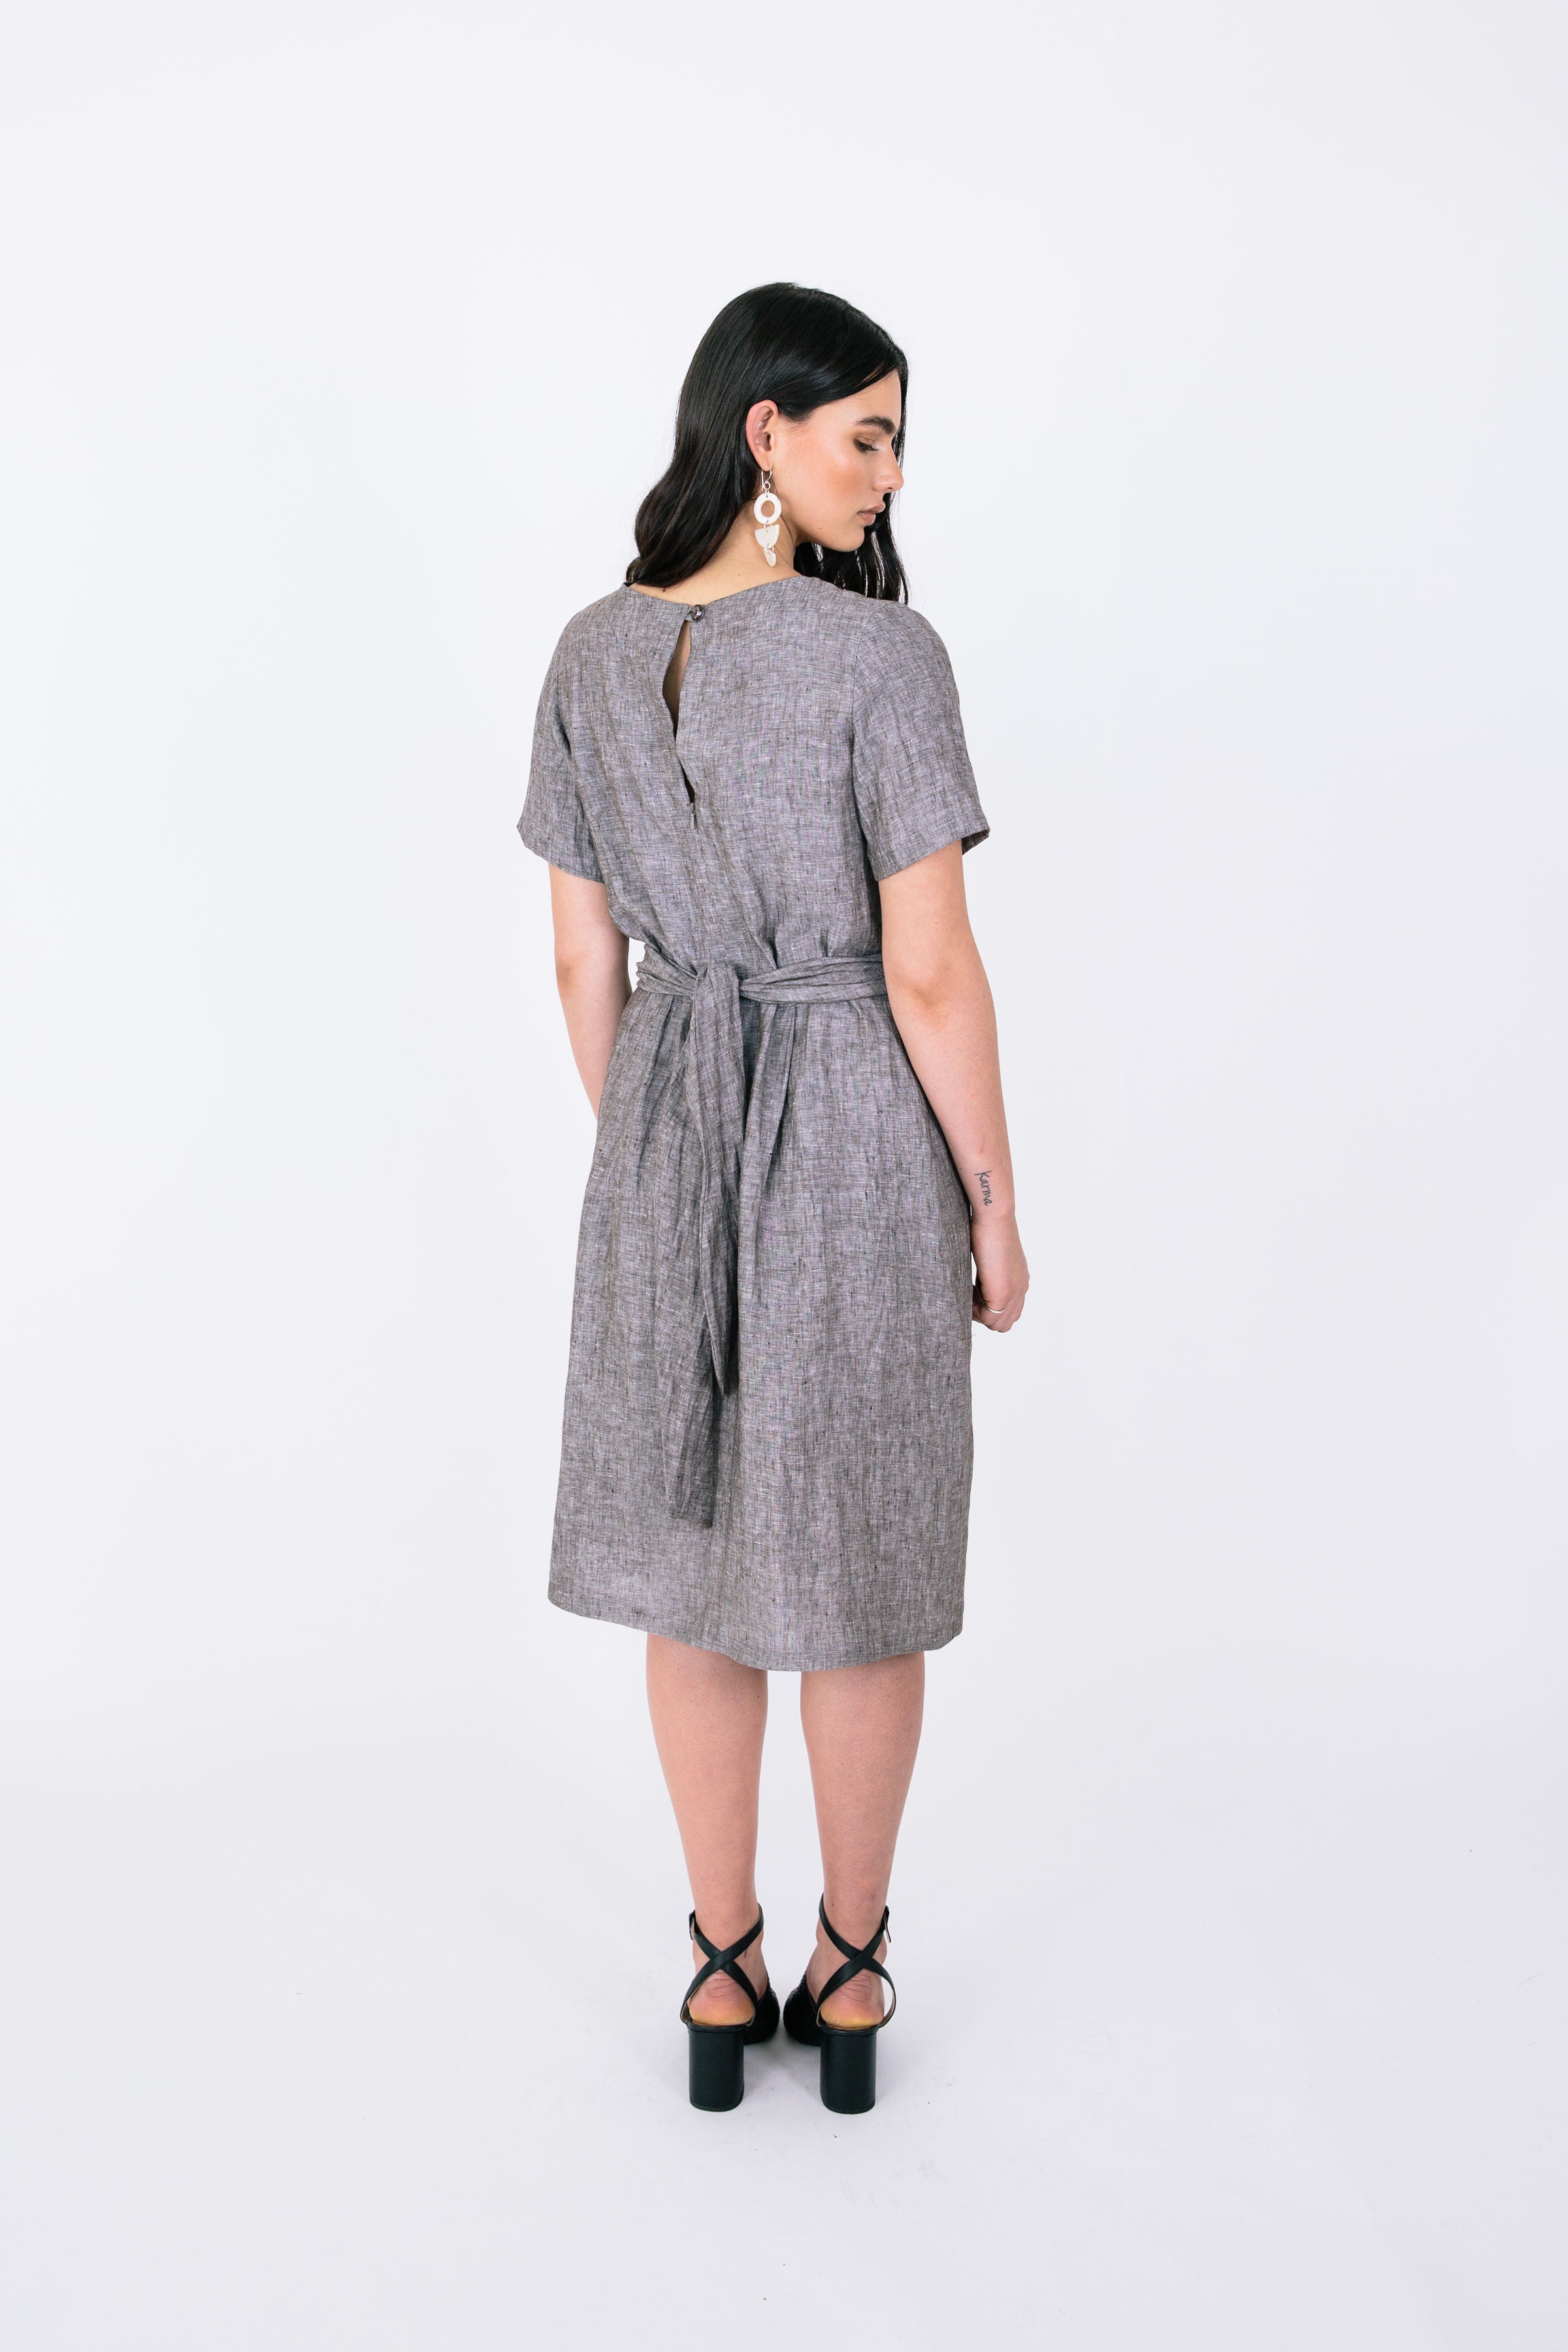 Papercut Patterns - Meridian Dress Sewing Pattern